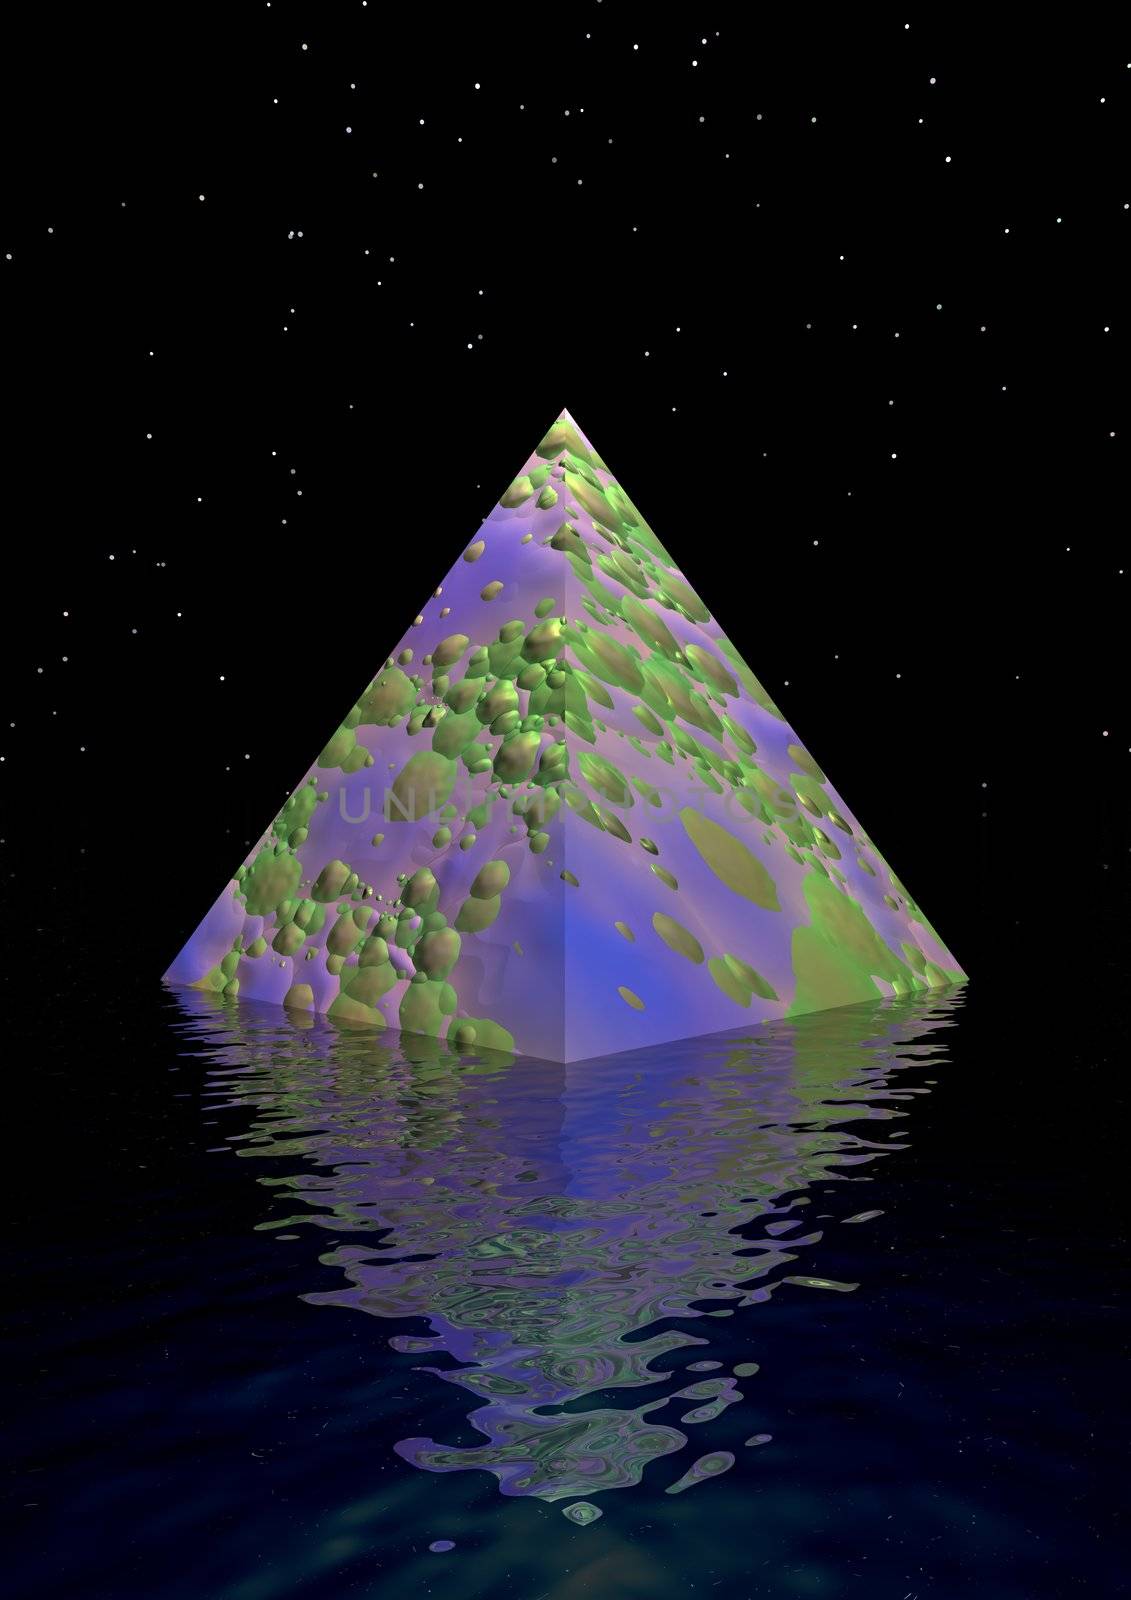 pyramid purpule and green